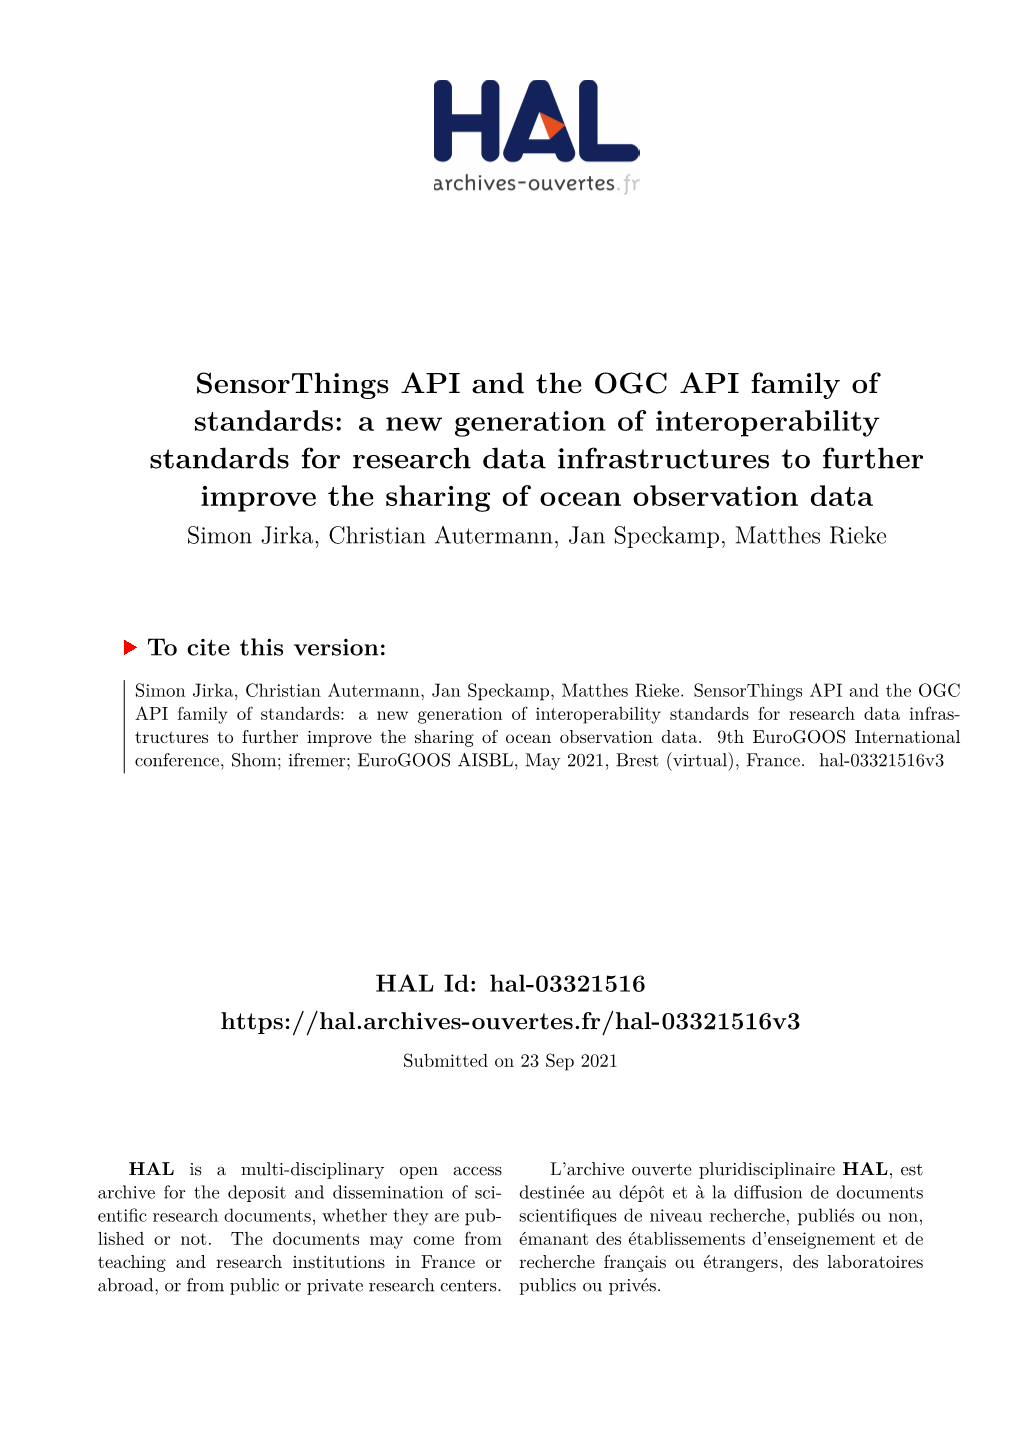 Sensorthings API and the OGC API Family Of